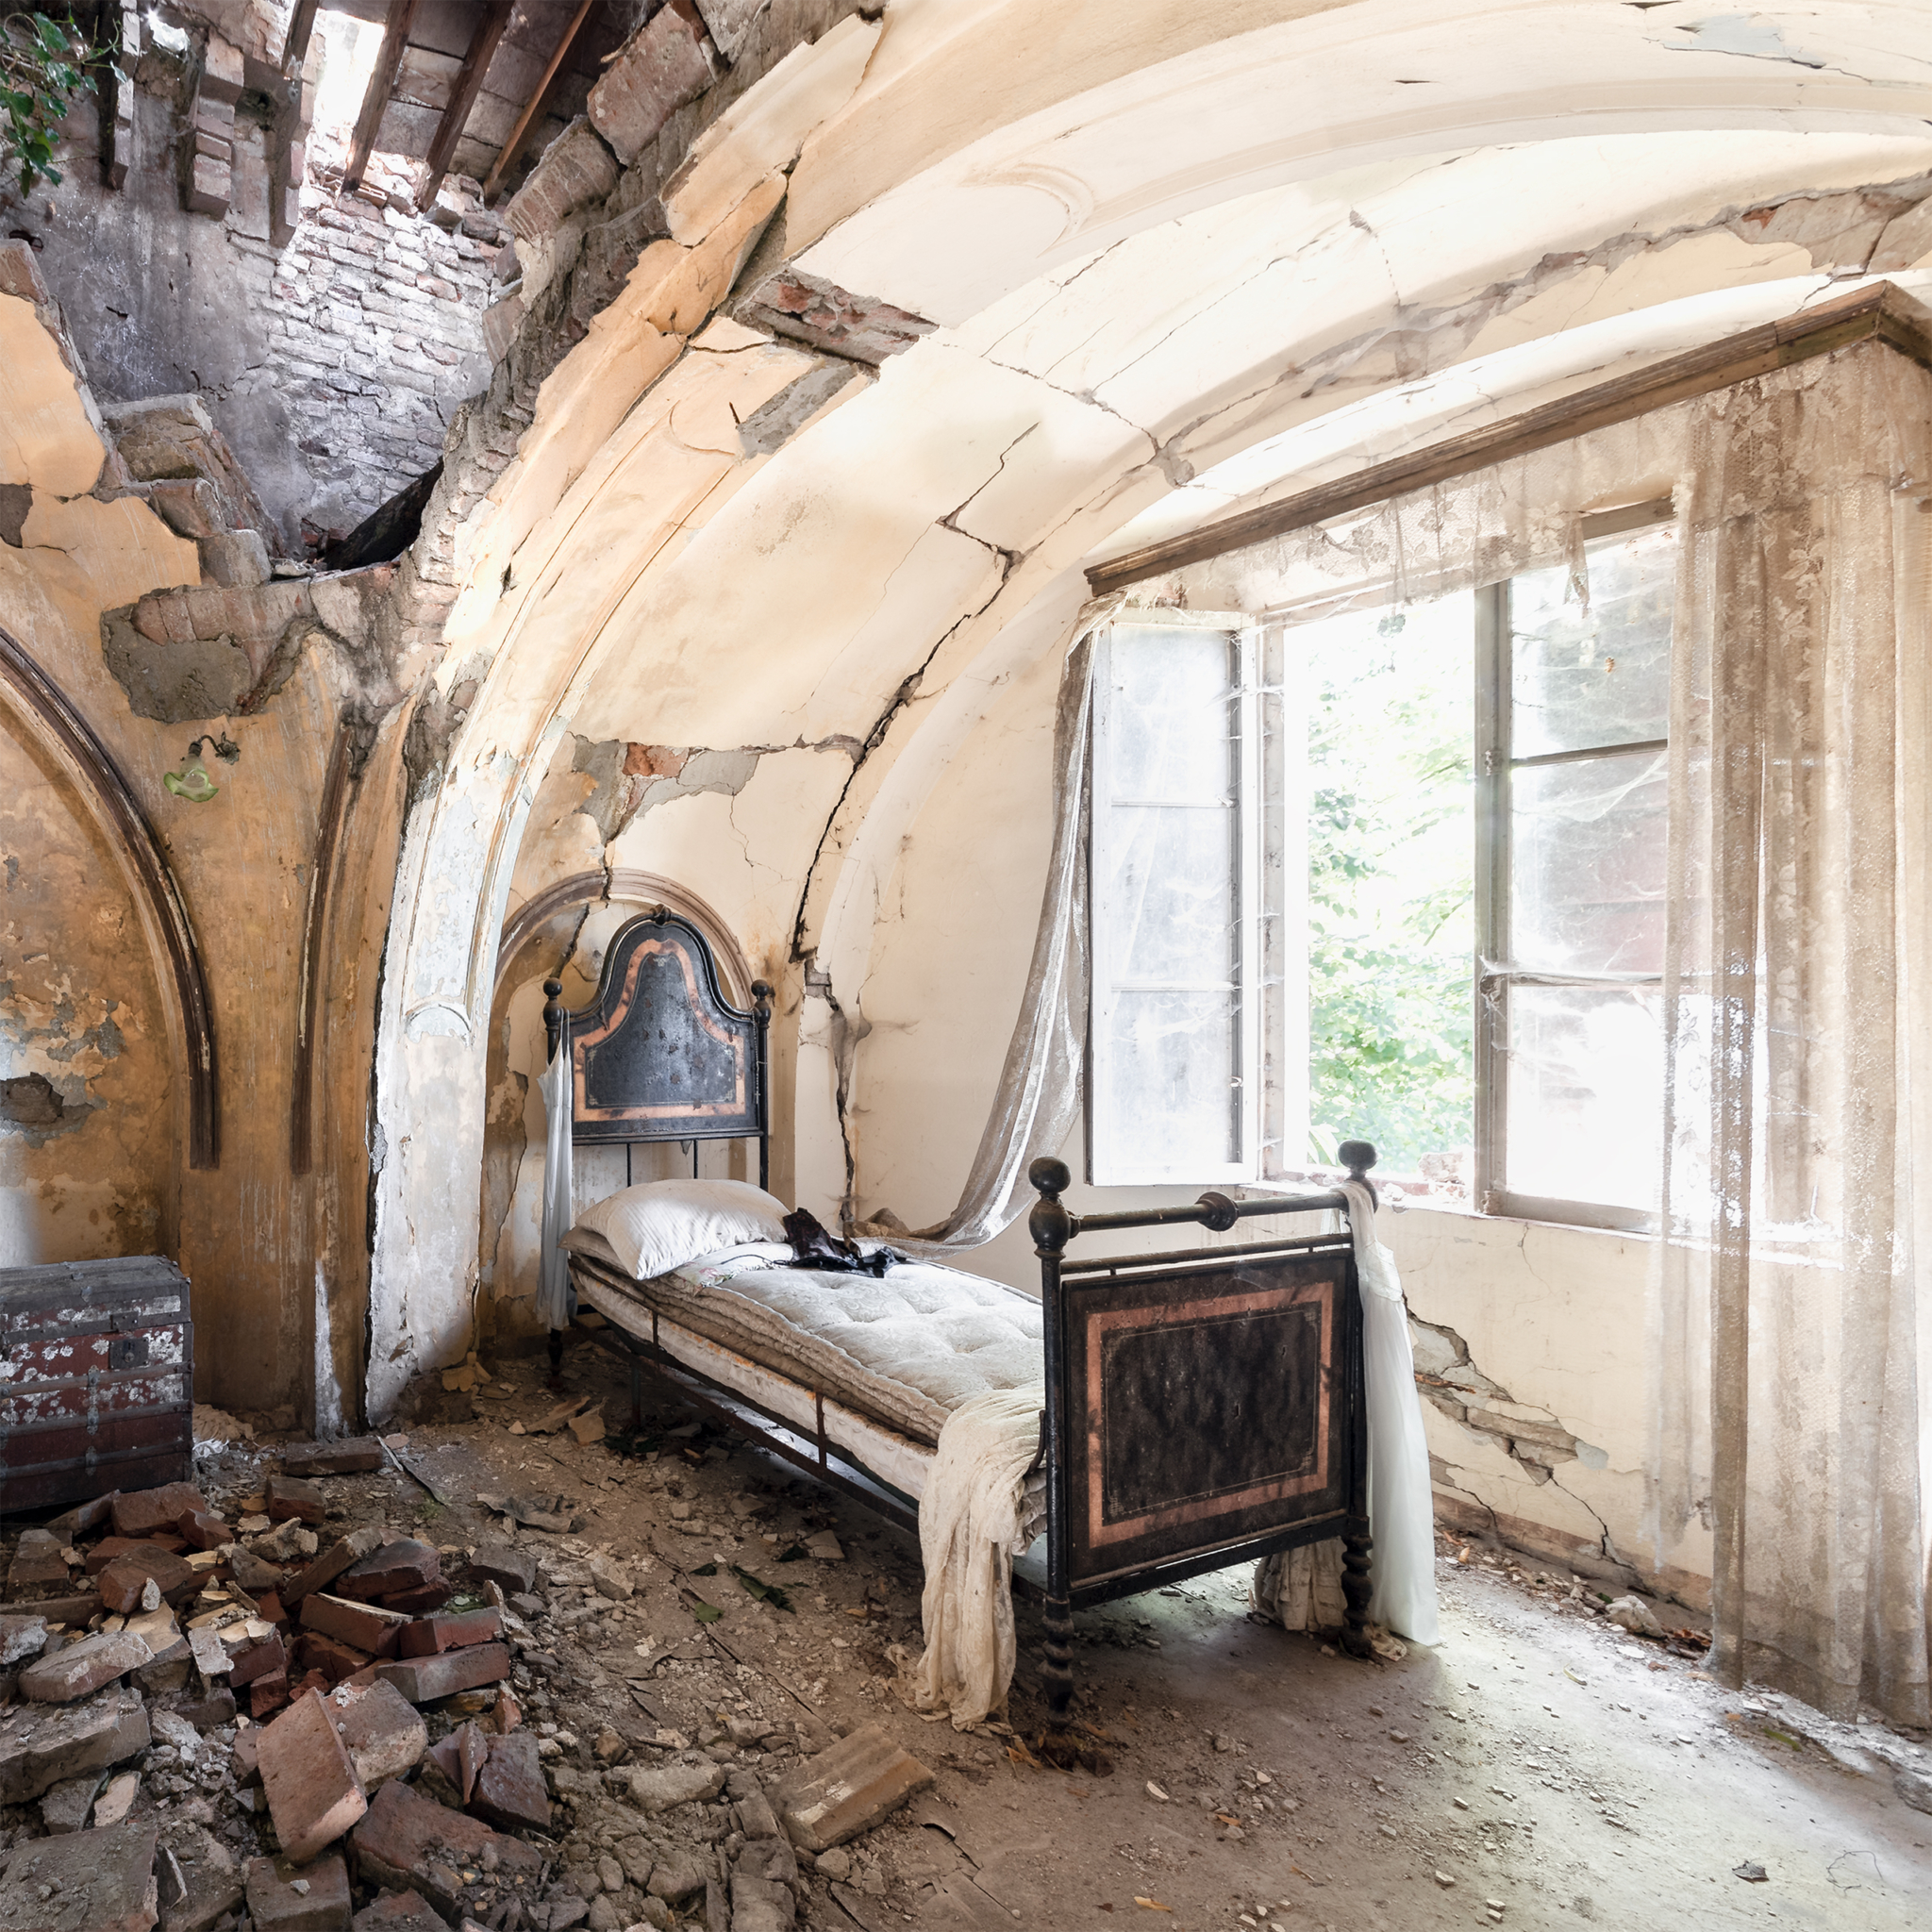 Angeli - Abandoned Villa in Italy